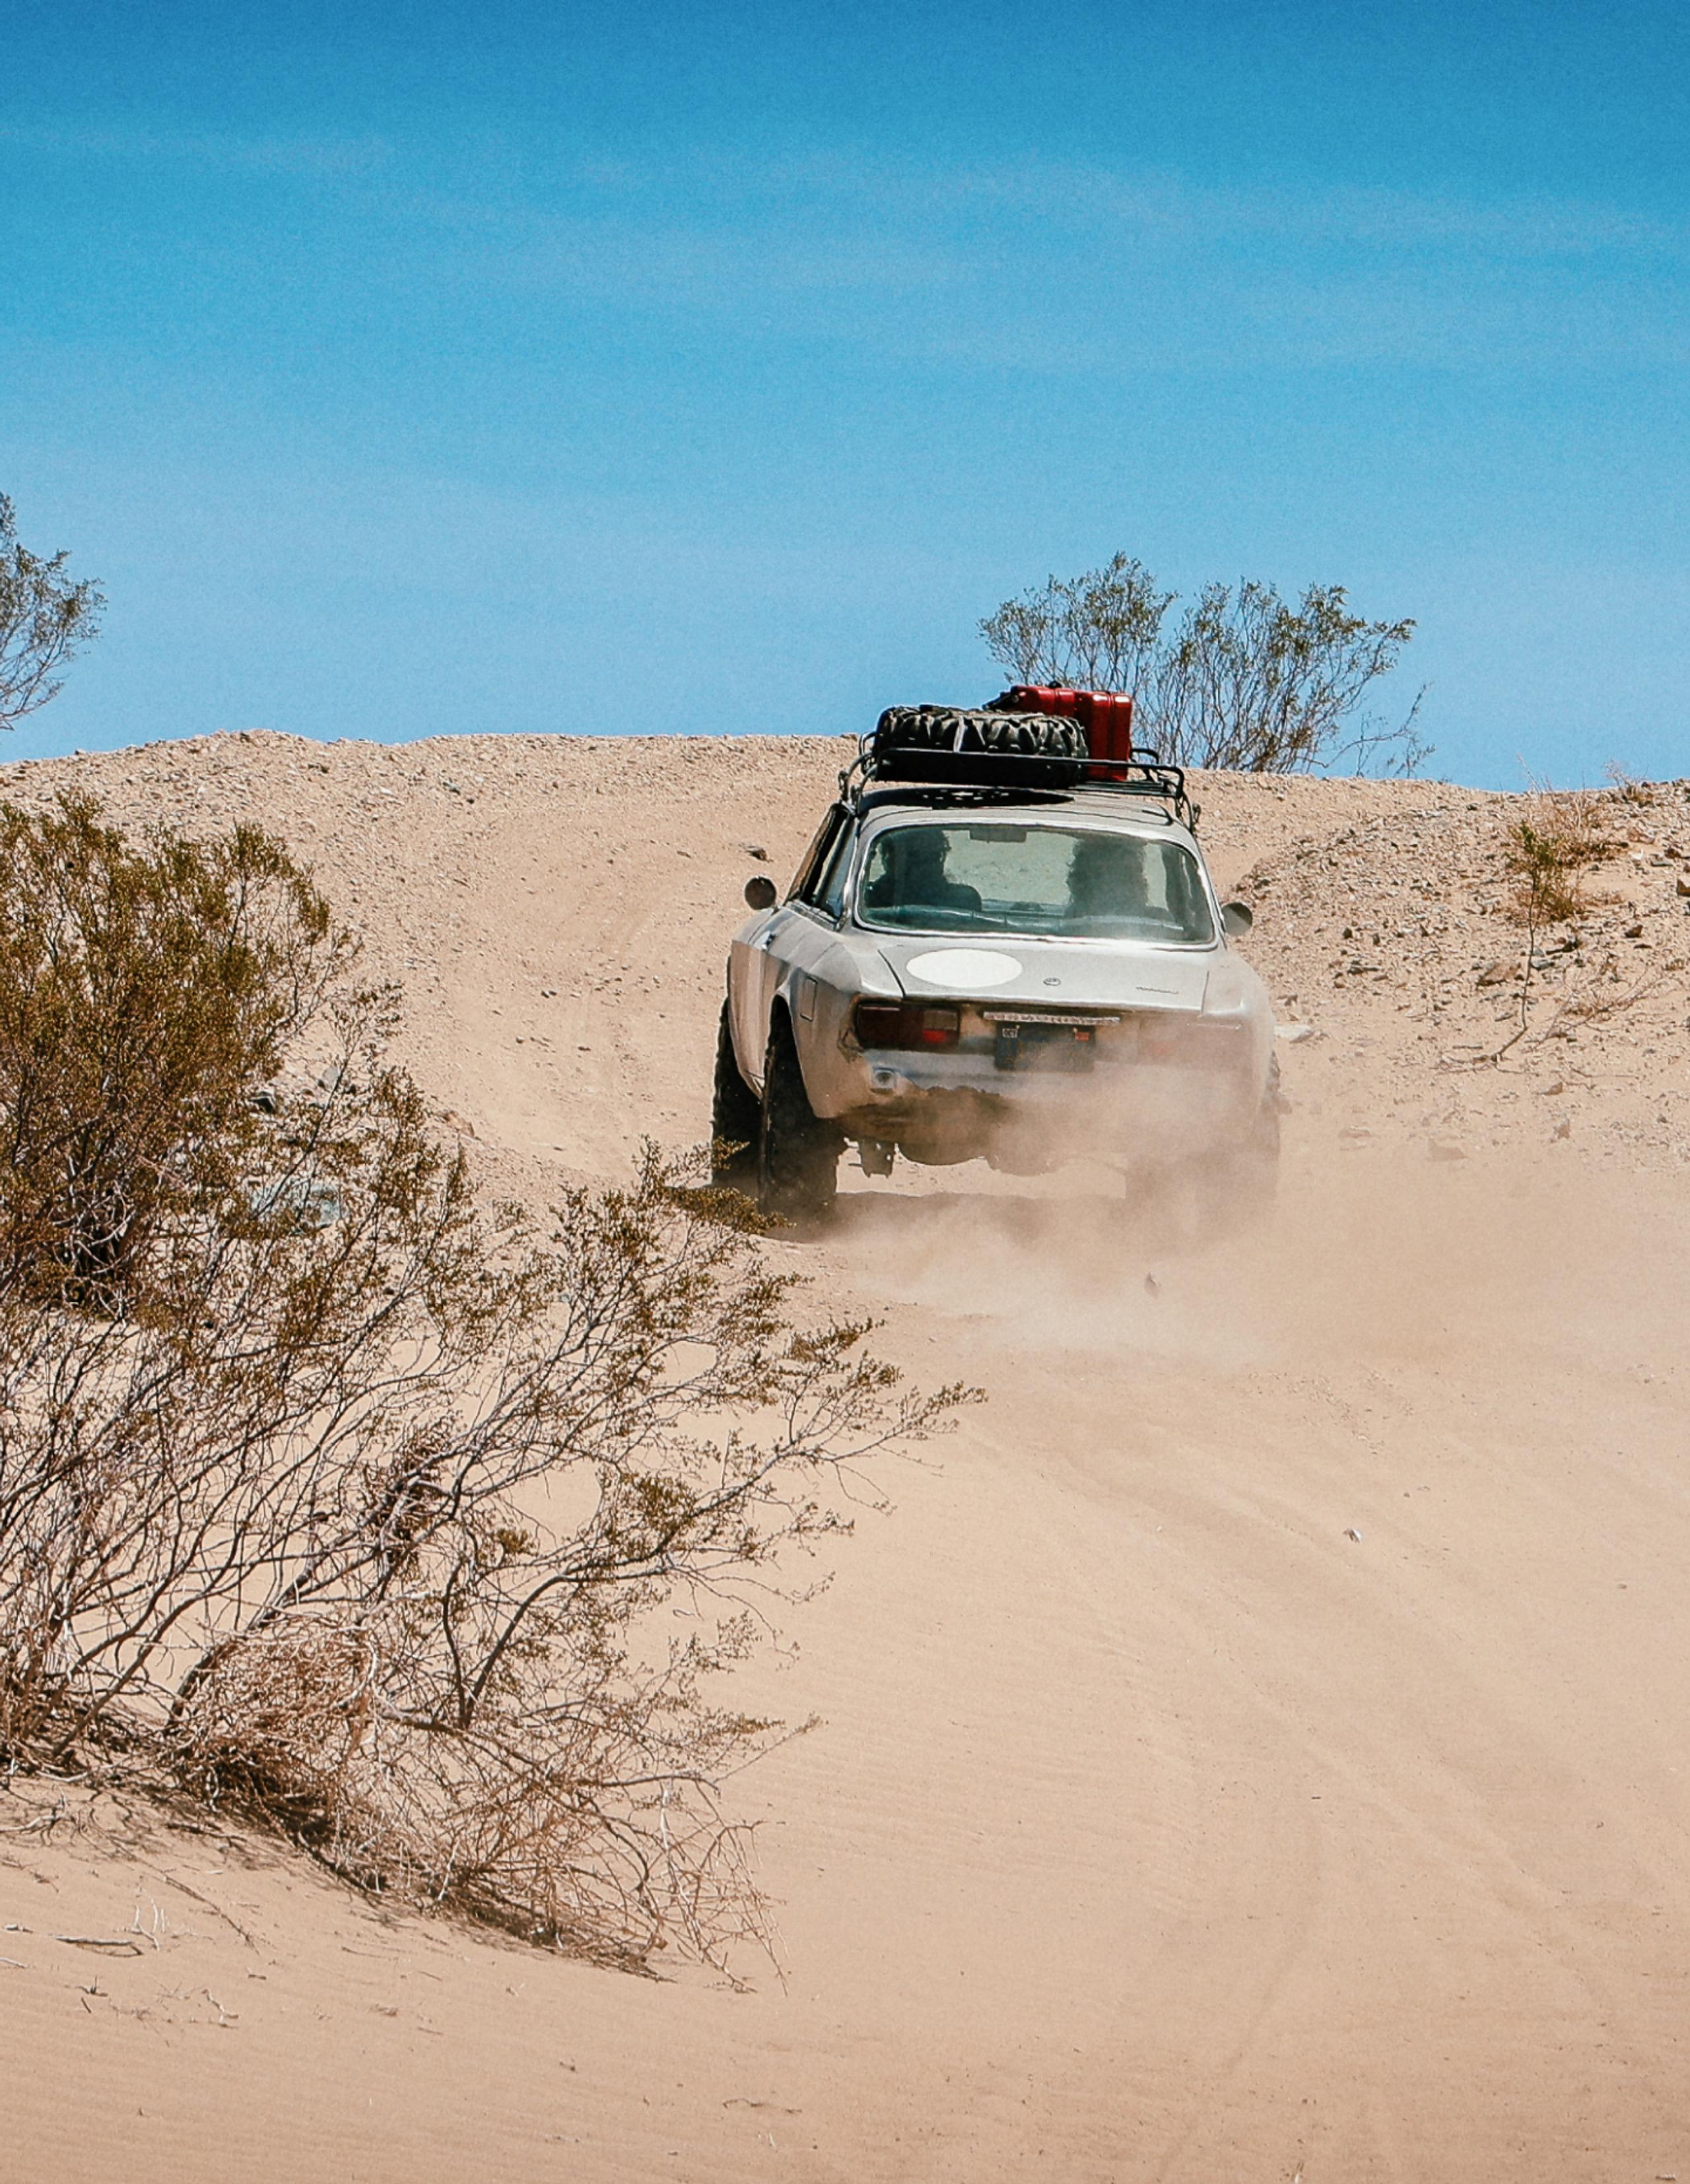 Vintage car driving through the Joshua Tree desert landscape